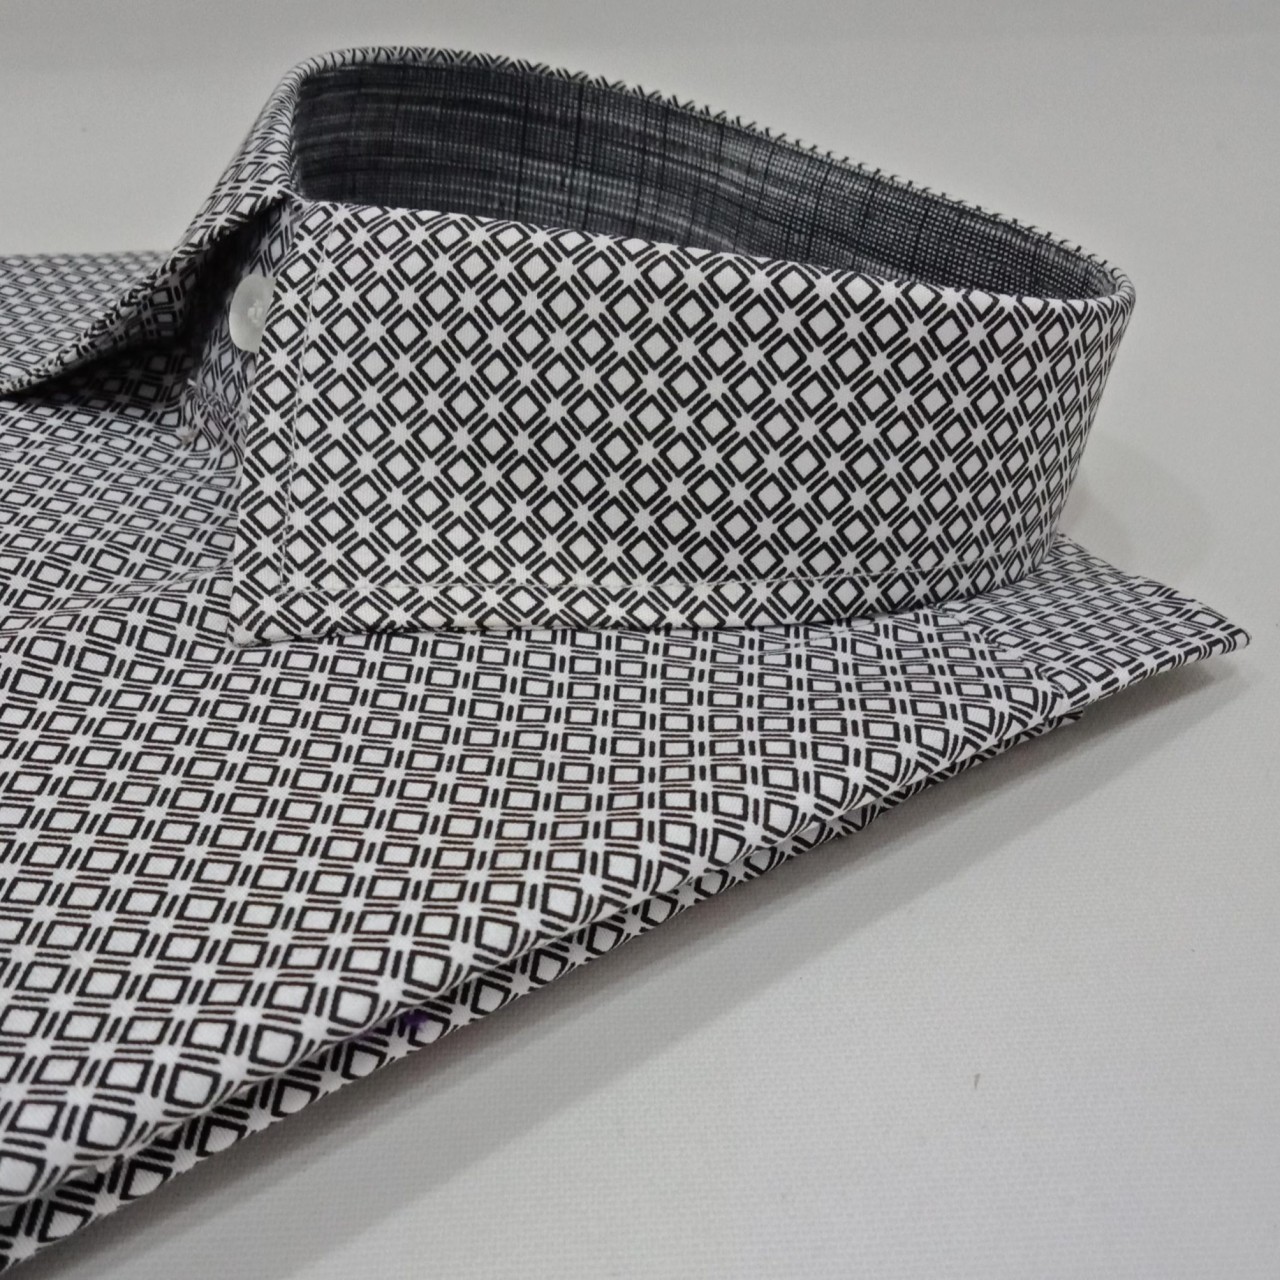 White & Black Squares Formal Shirt Men - Double Needle Stitching